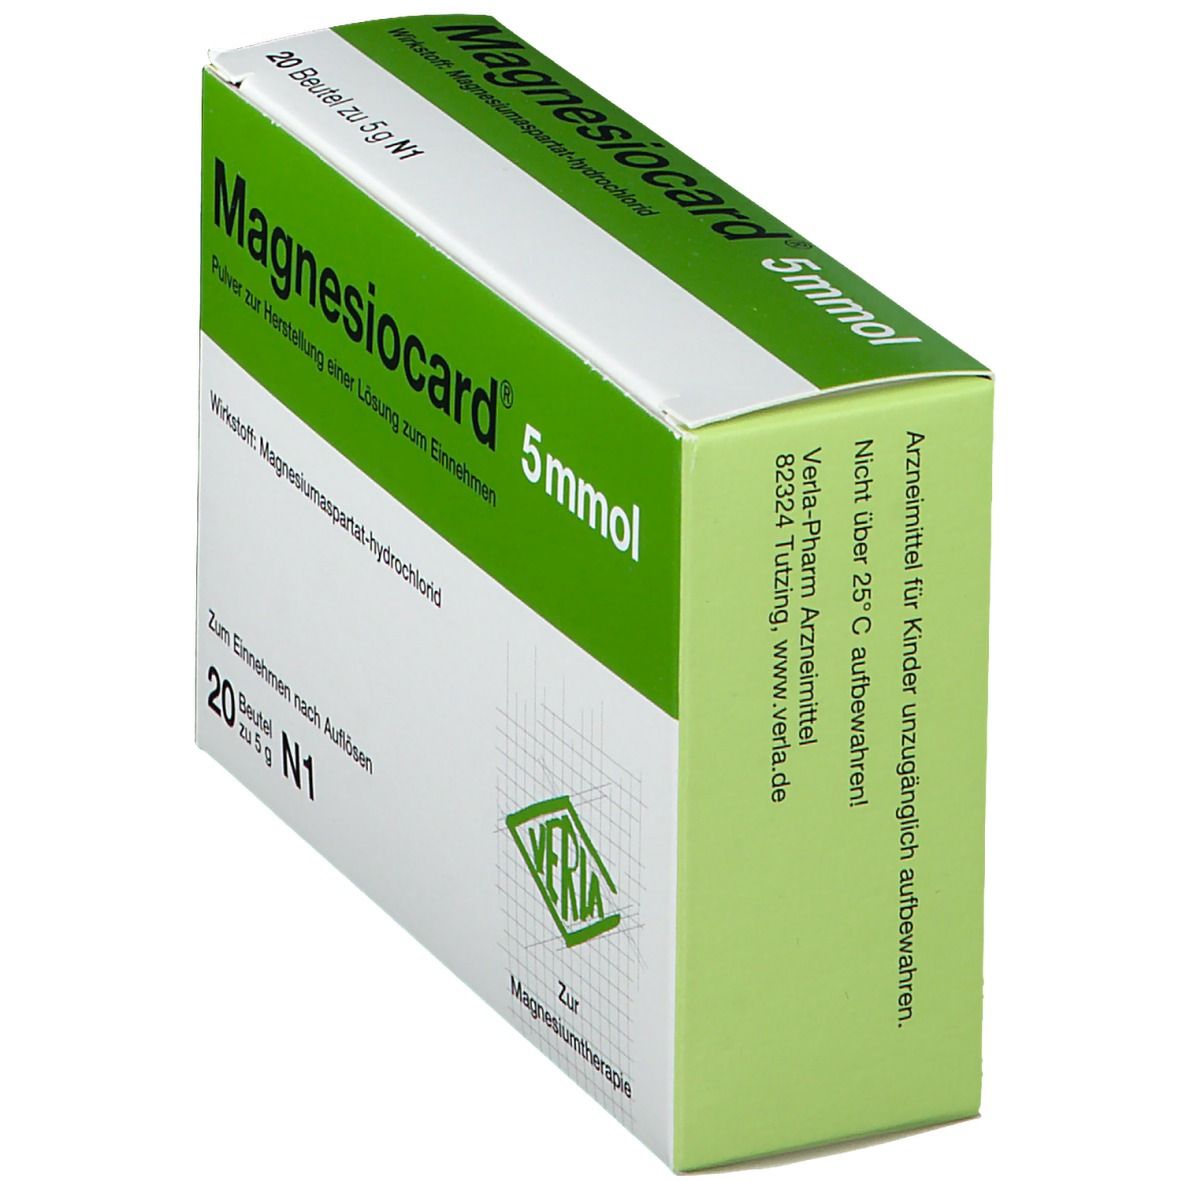 Magnesiocard® 5 mmol Pulverbeutel